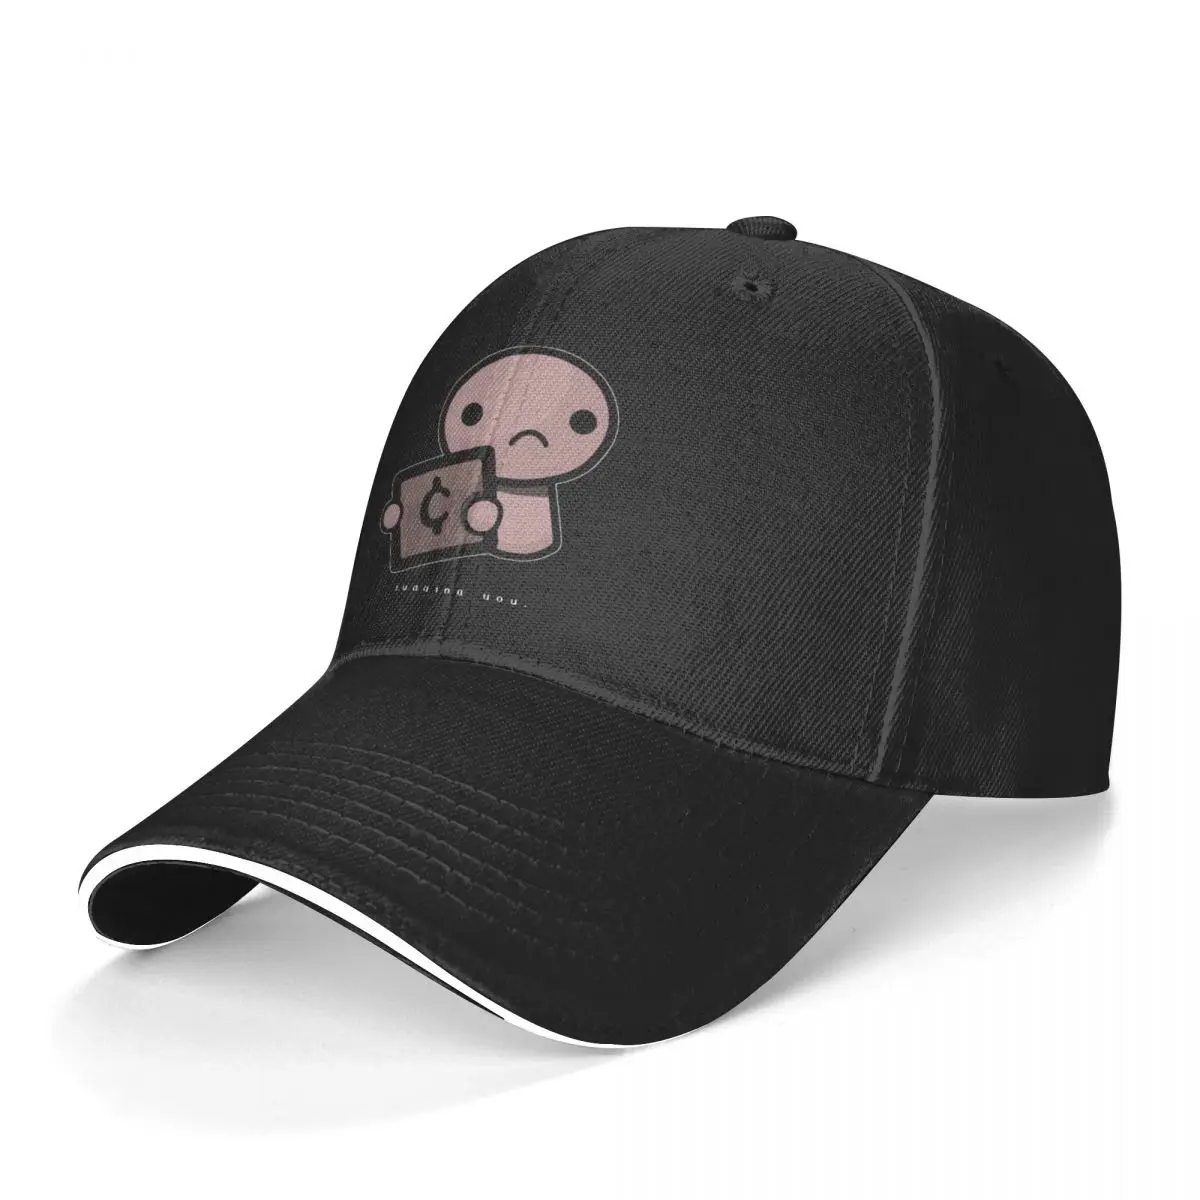 The Binding Of Isaac Baseball Cap Judging you dark background Fitted Unisex Hip Hop Hats Print Kpop Baseball Caps Gift